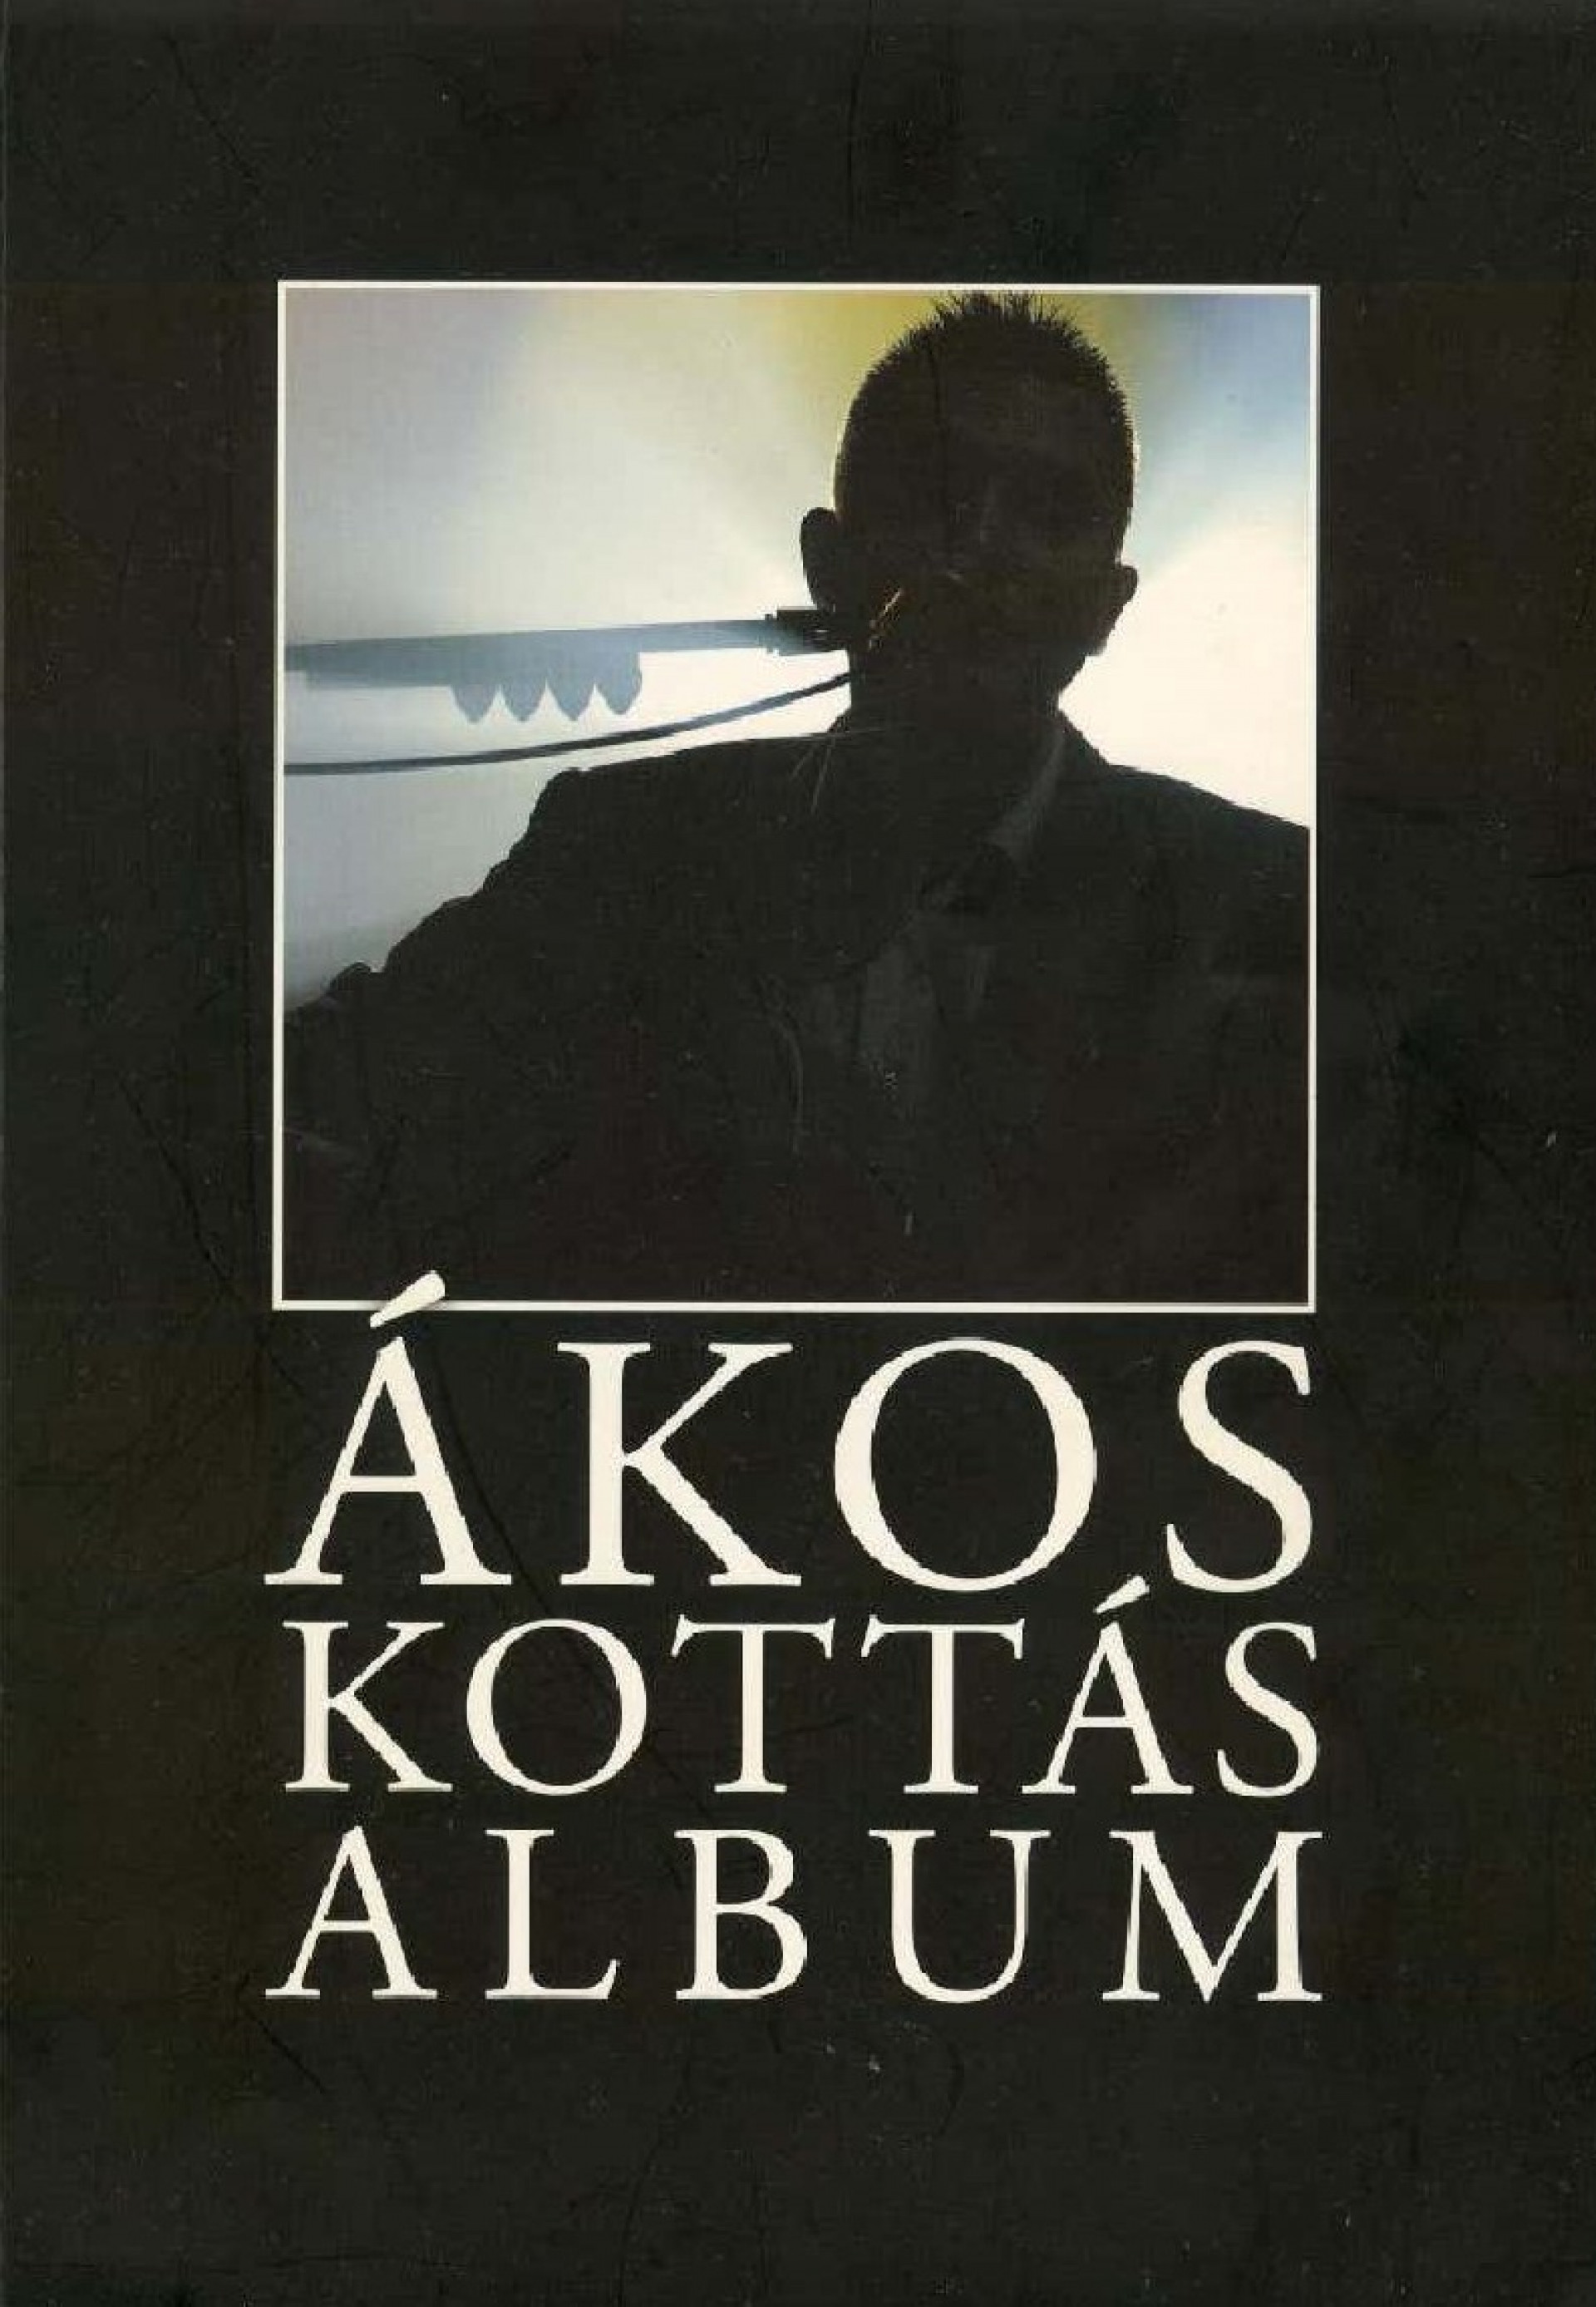 KOTTÁS ALBUM (2006)